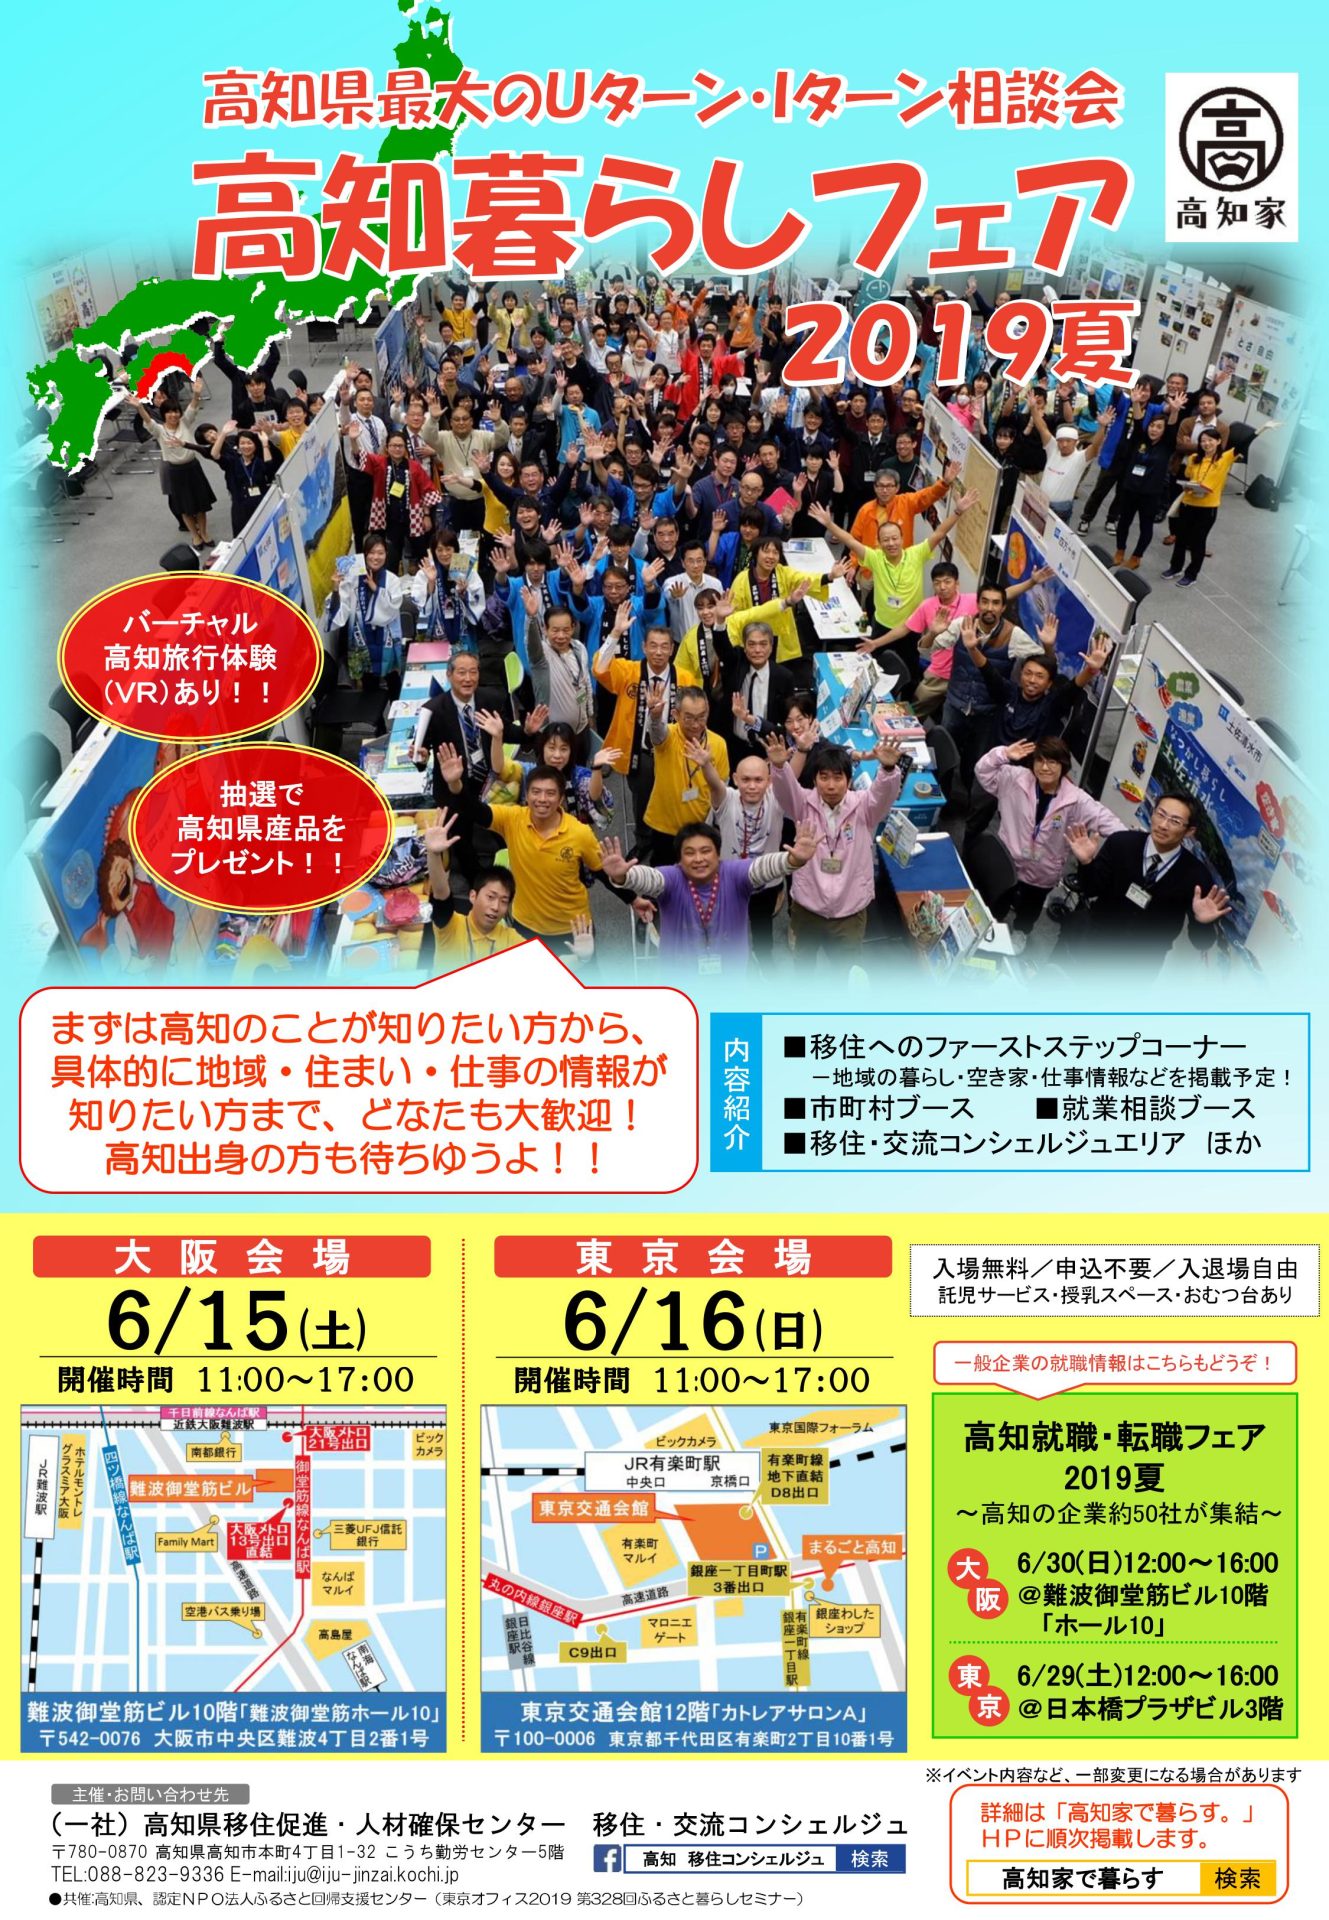 Ｕターン・Ｉターン相談会「高知暮らしフェア2019夏」 | 移住関連イベント情報